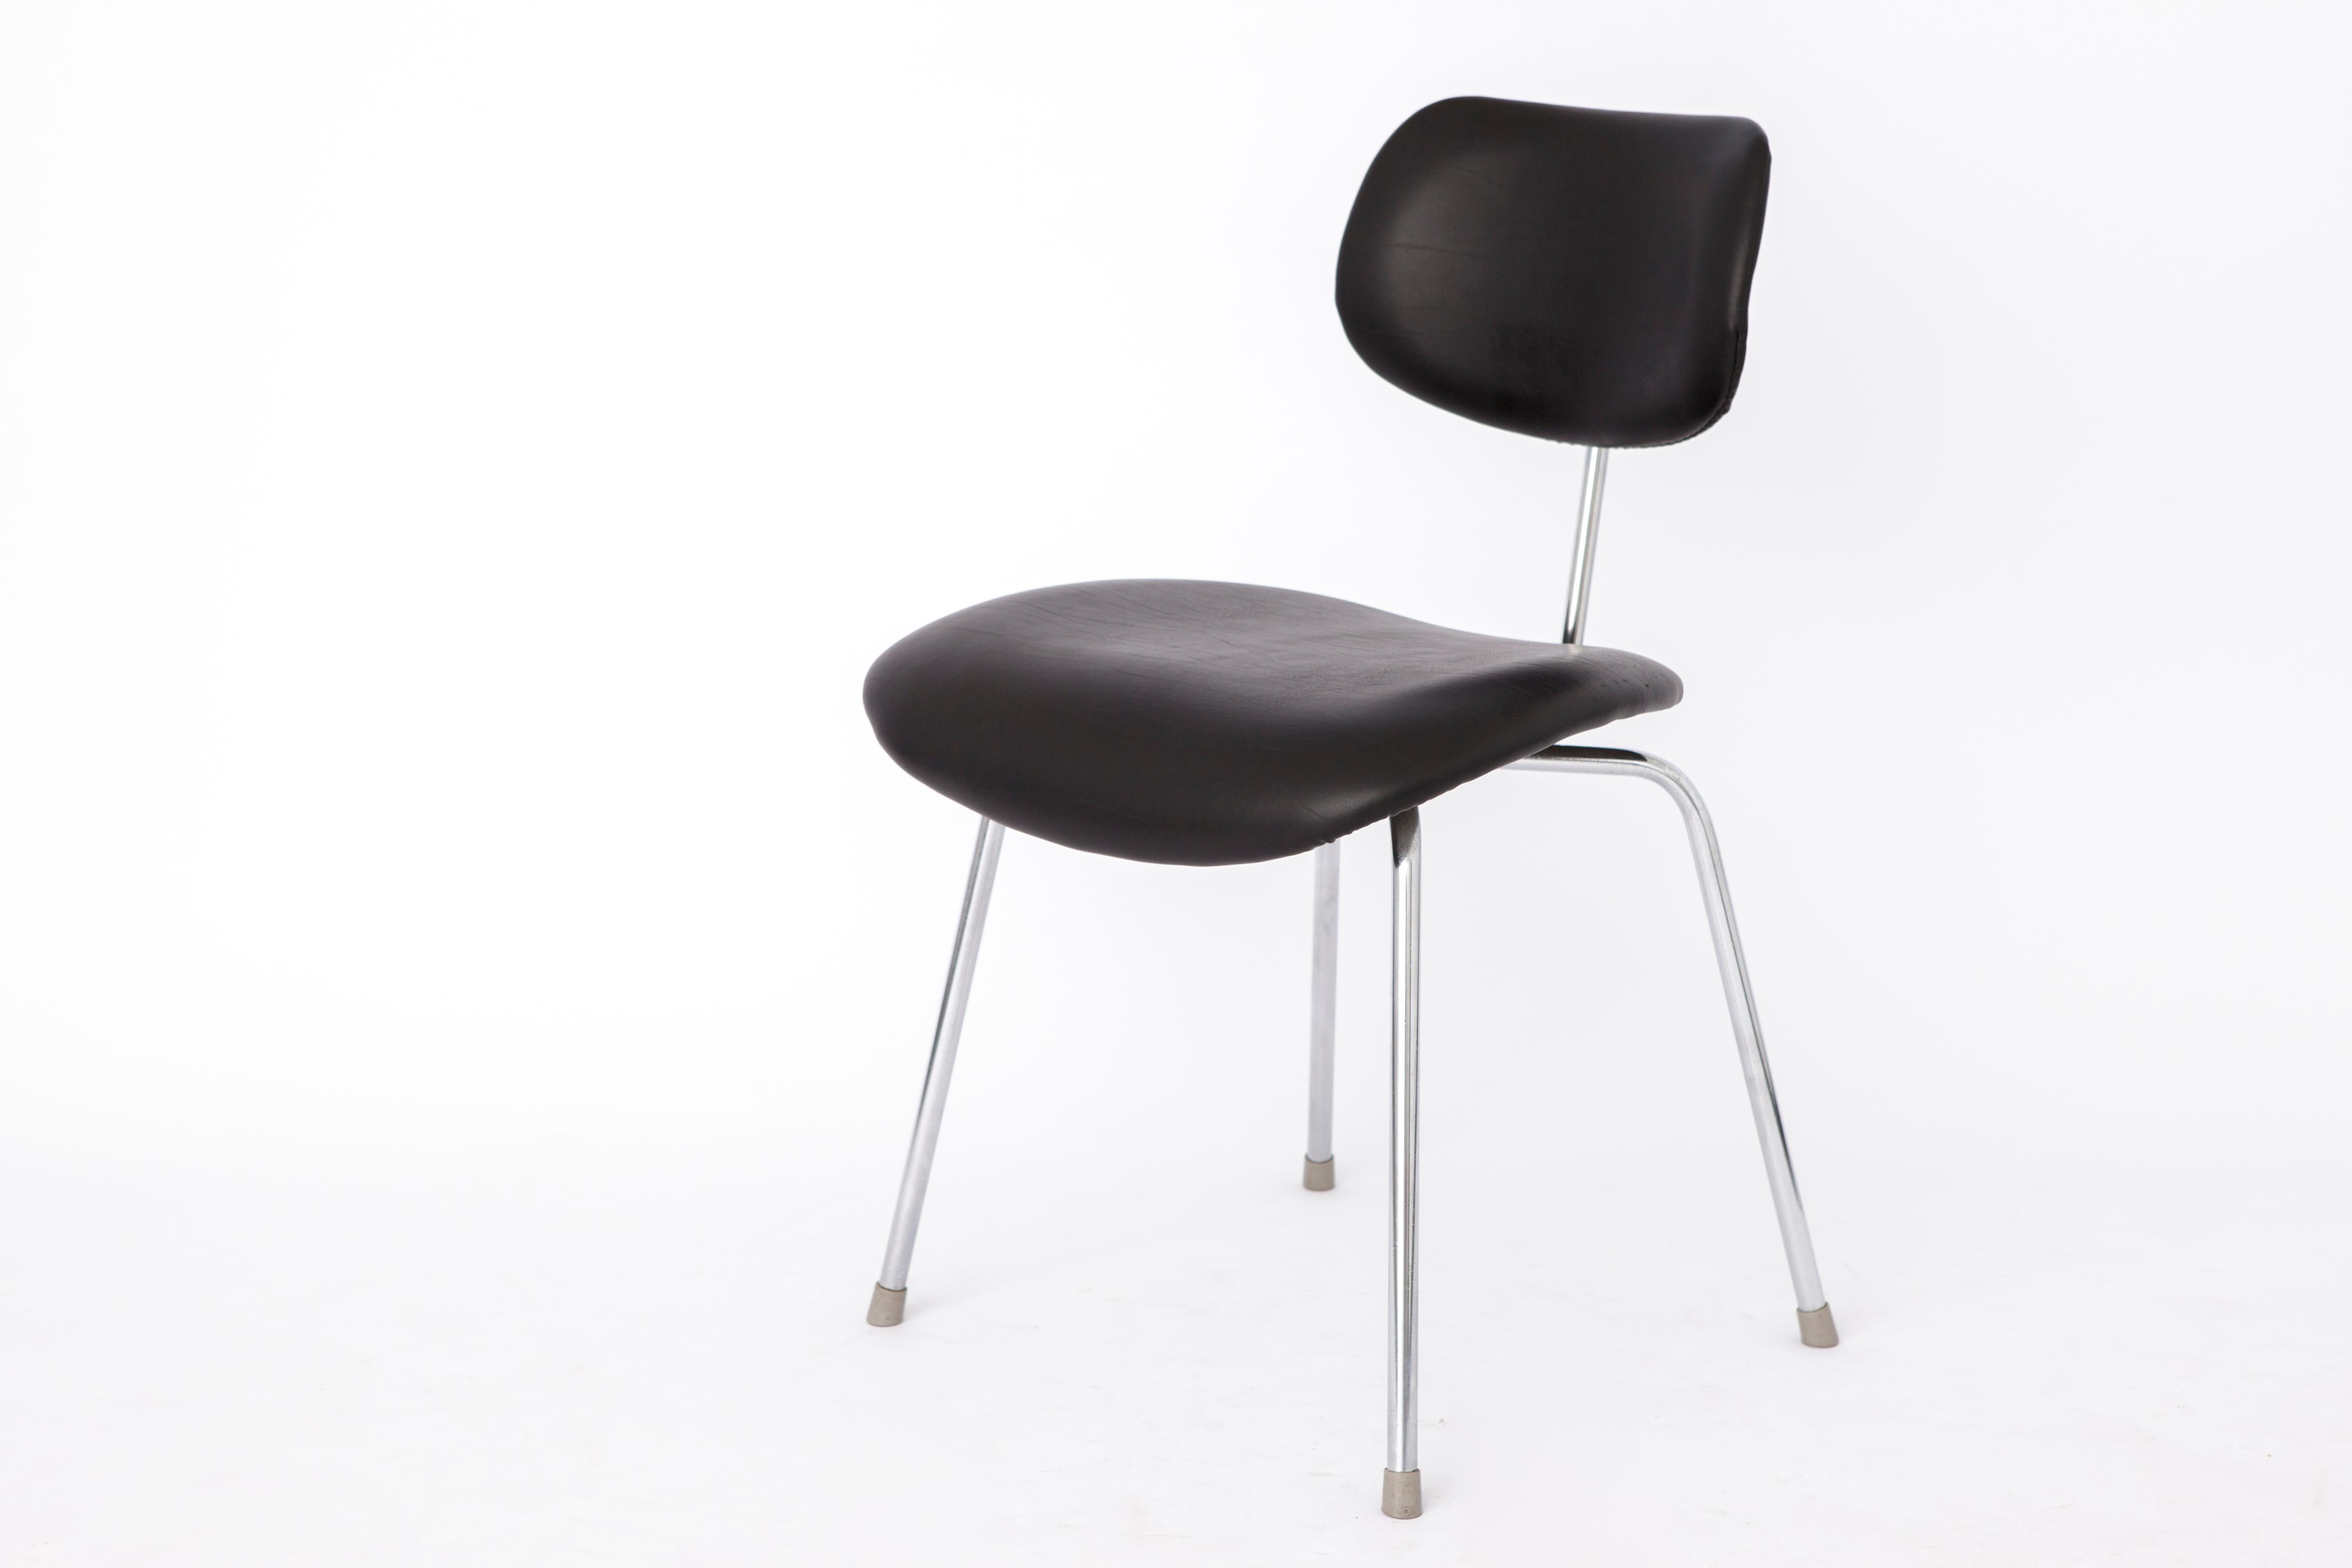 Mid-Century Modern Vintage chair by Egon Eiermann, 1950s Germany, model SE68, for Wilde & Spieth, b